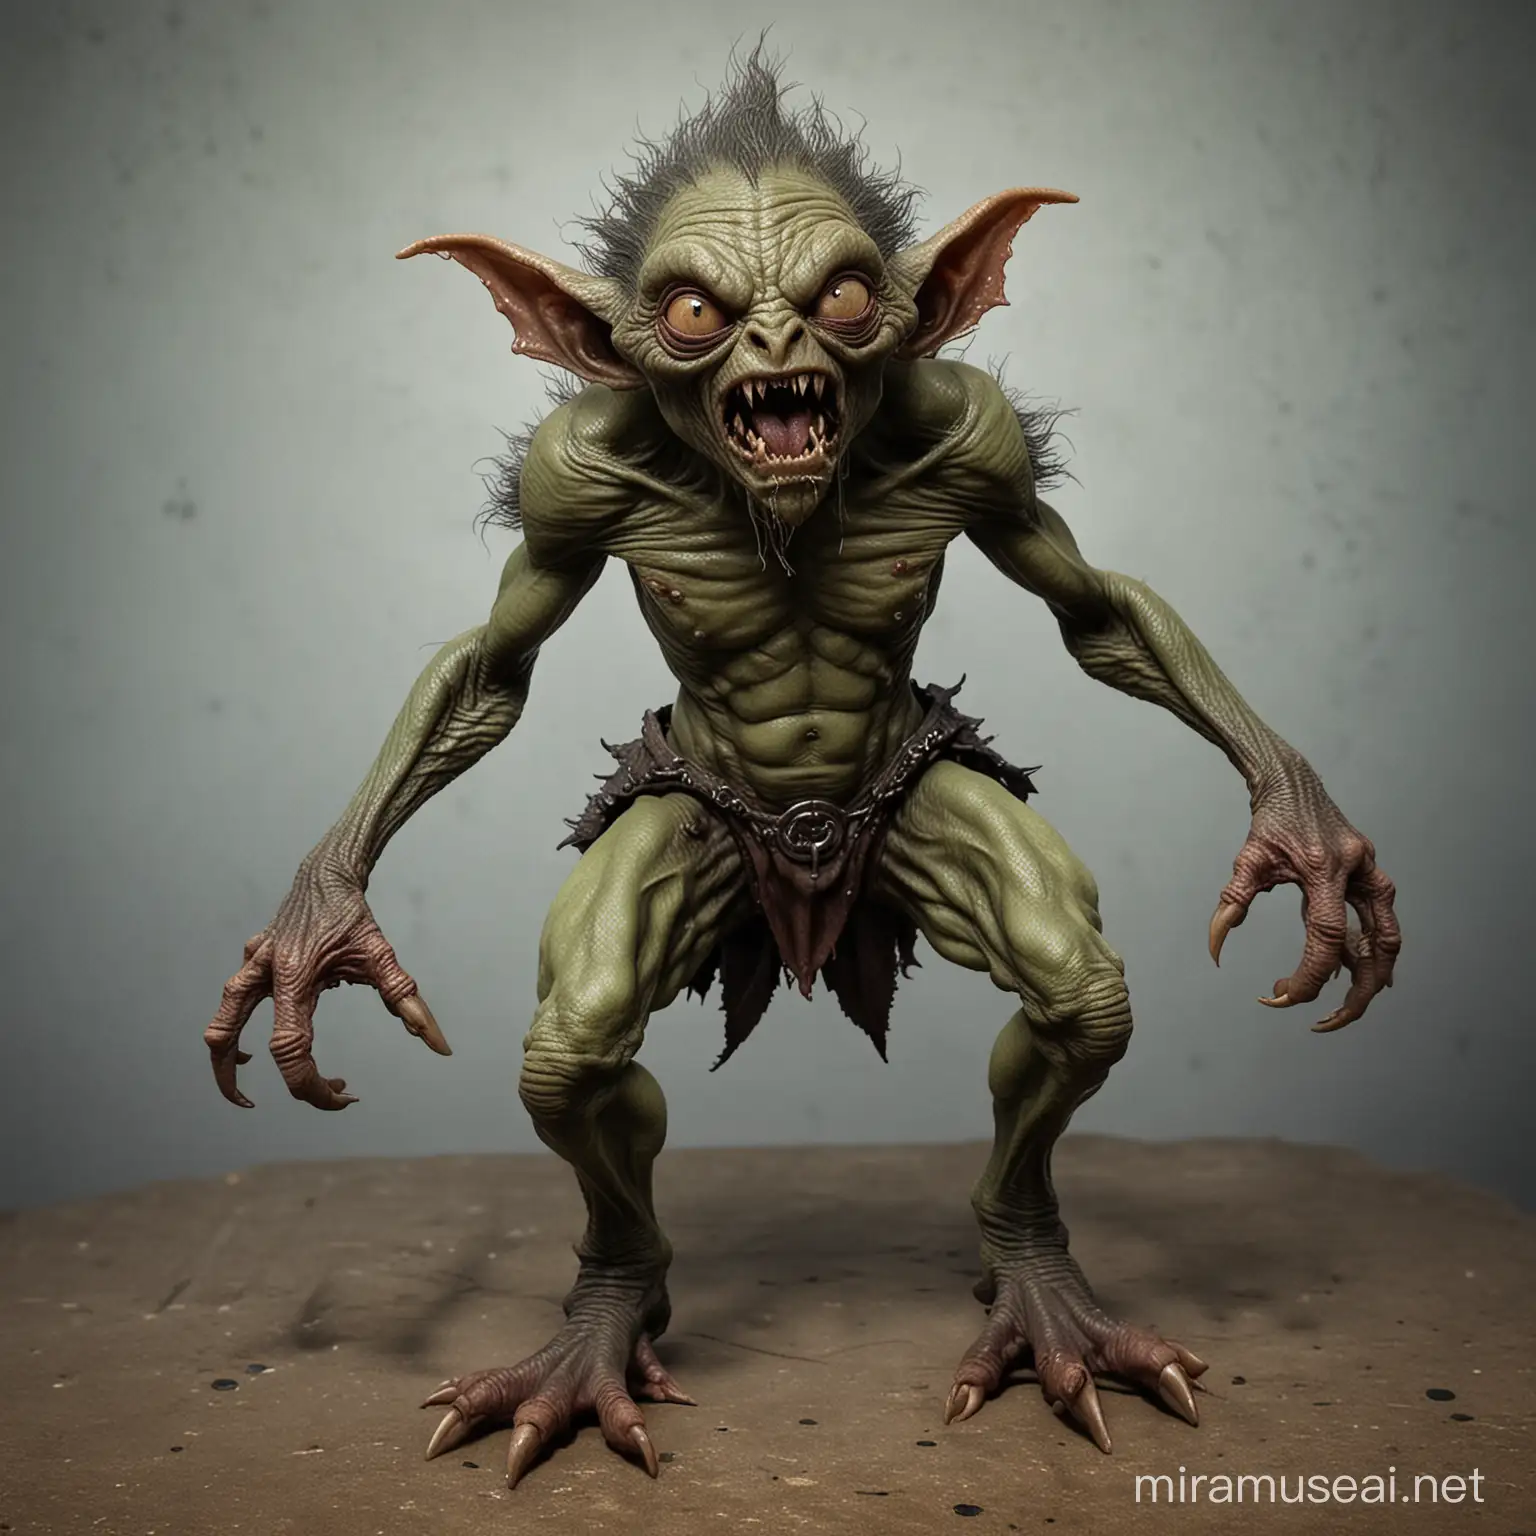 Lovecraftian disturbing crotch goblin